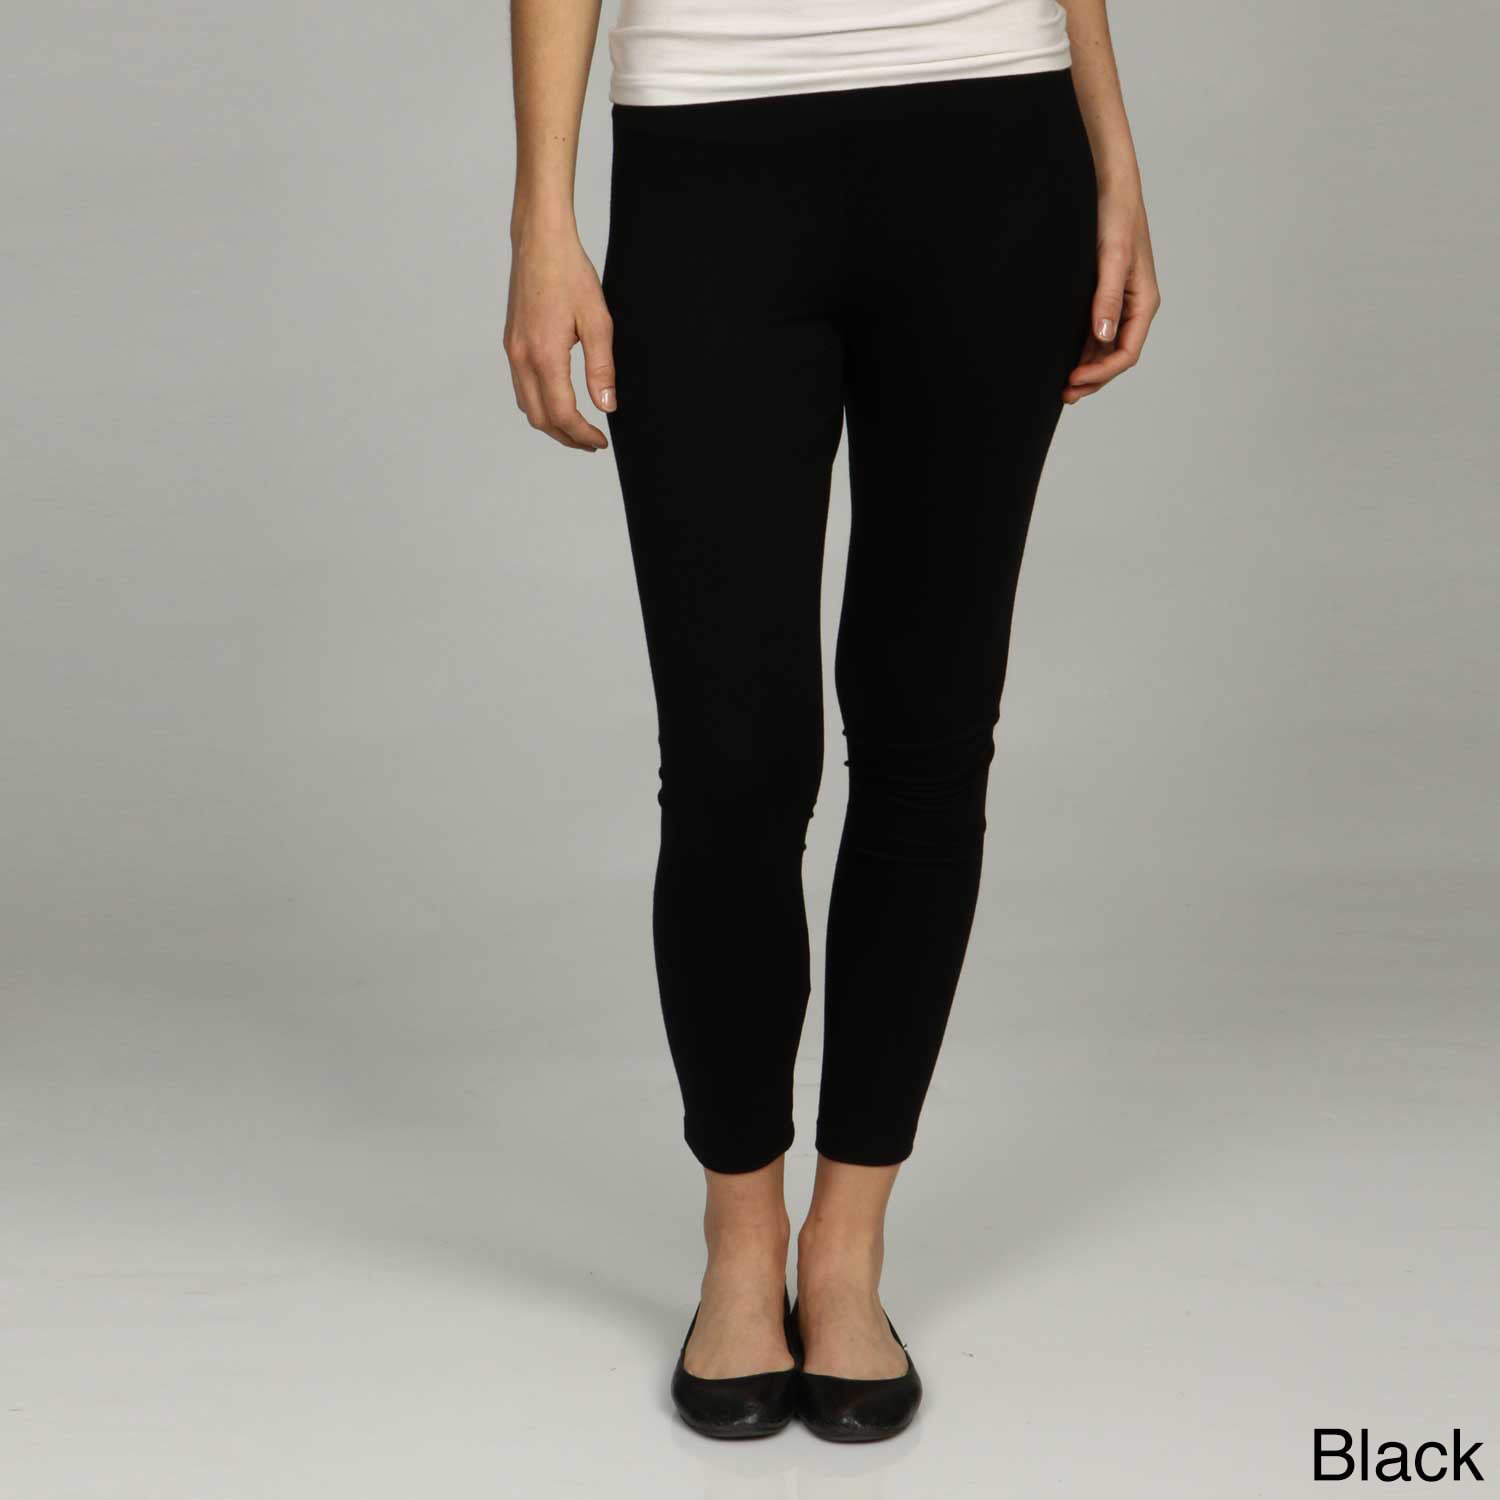 Buy AANGVASTRA Women Solid Ankle-Length Leggings Combo Pack of 2 Black,  White at